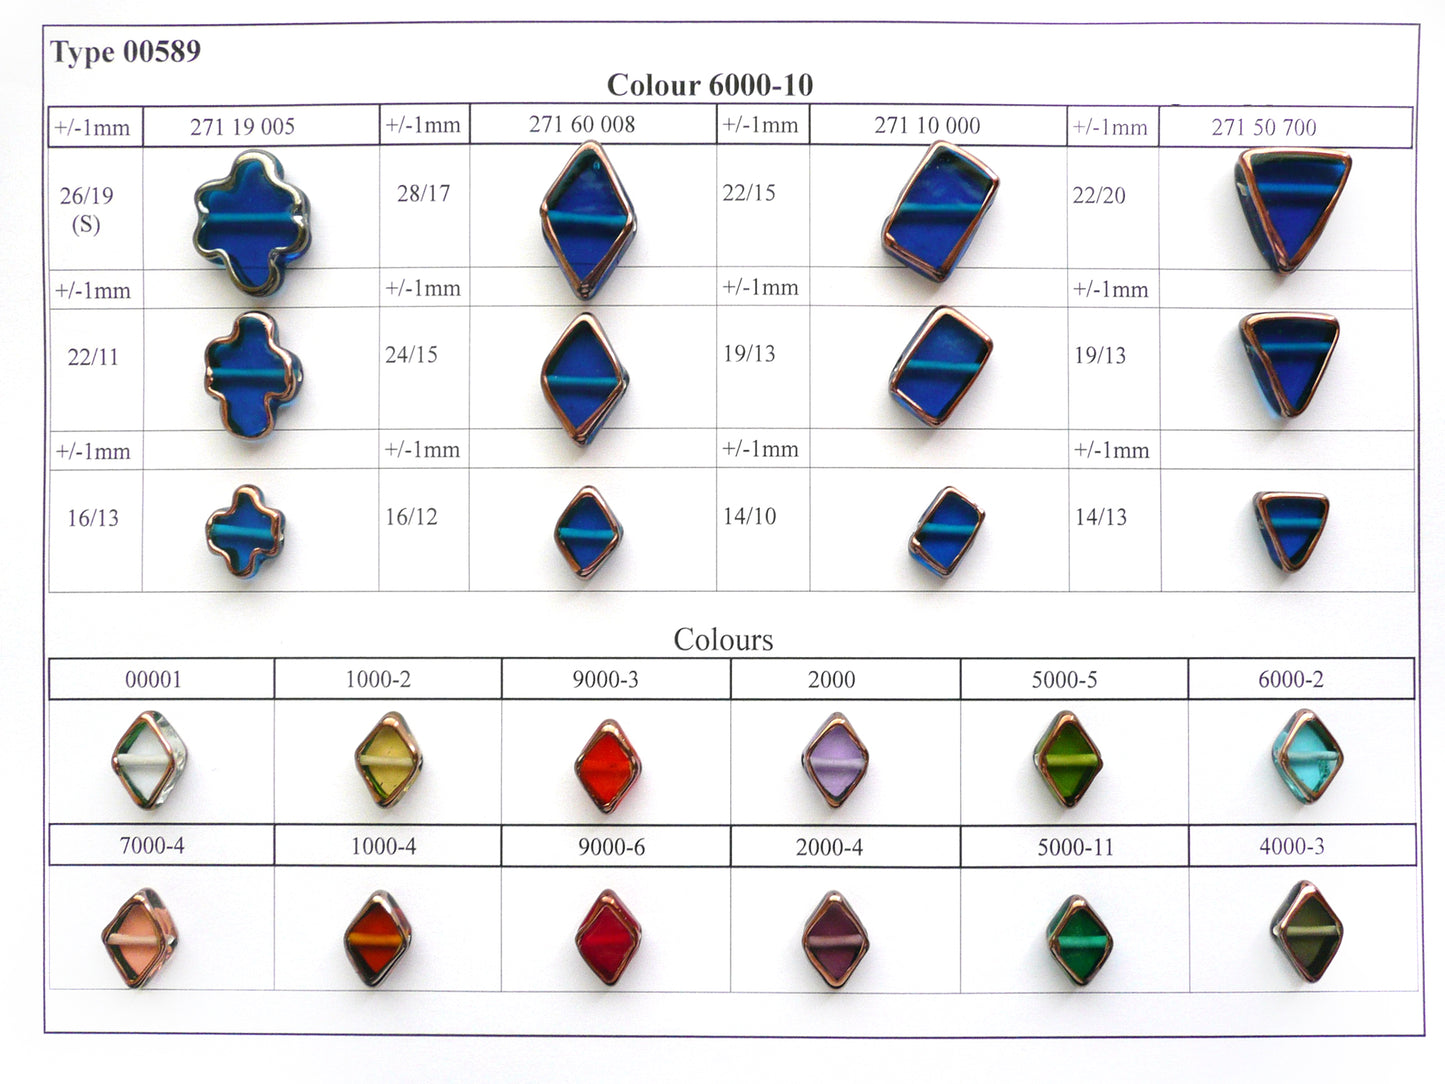 30 pcs Lampwork Beads 589 / Flat Turned Rectangle (271-10-000), Handmade, Preciosa Glass, Czech Republic